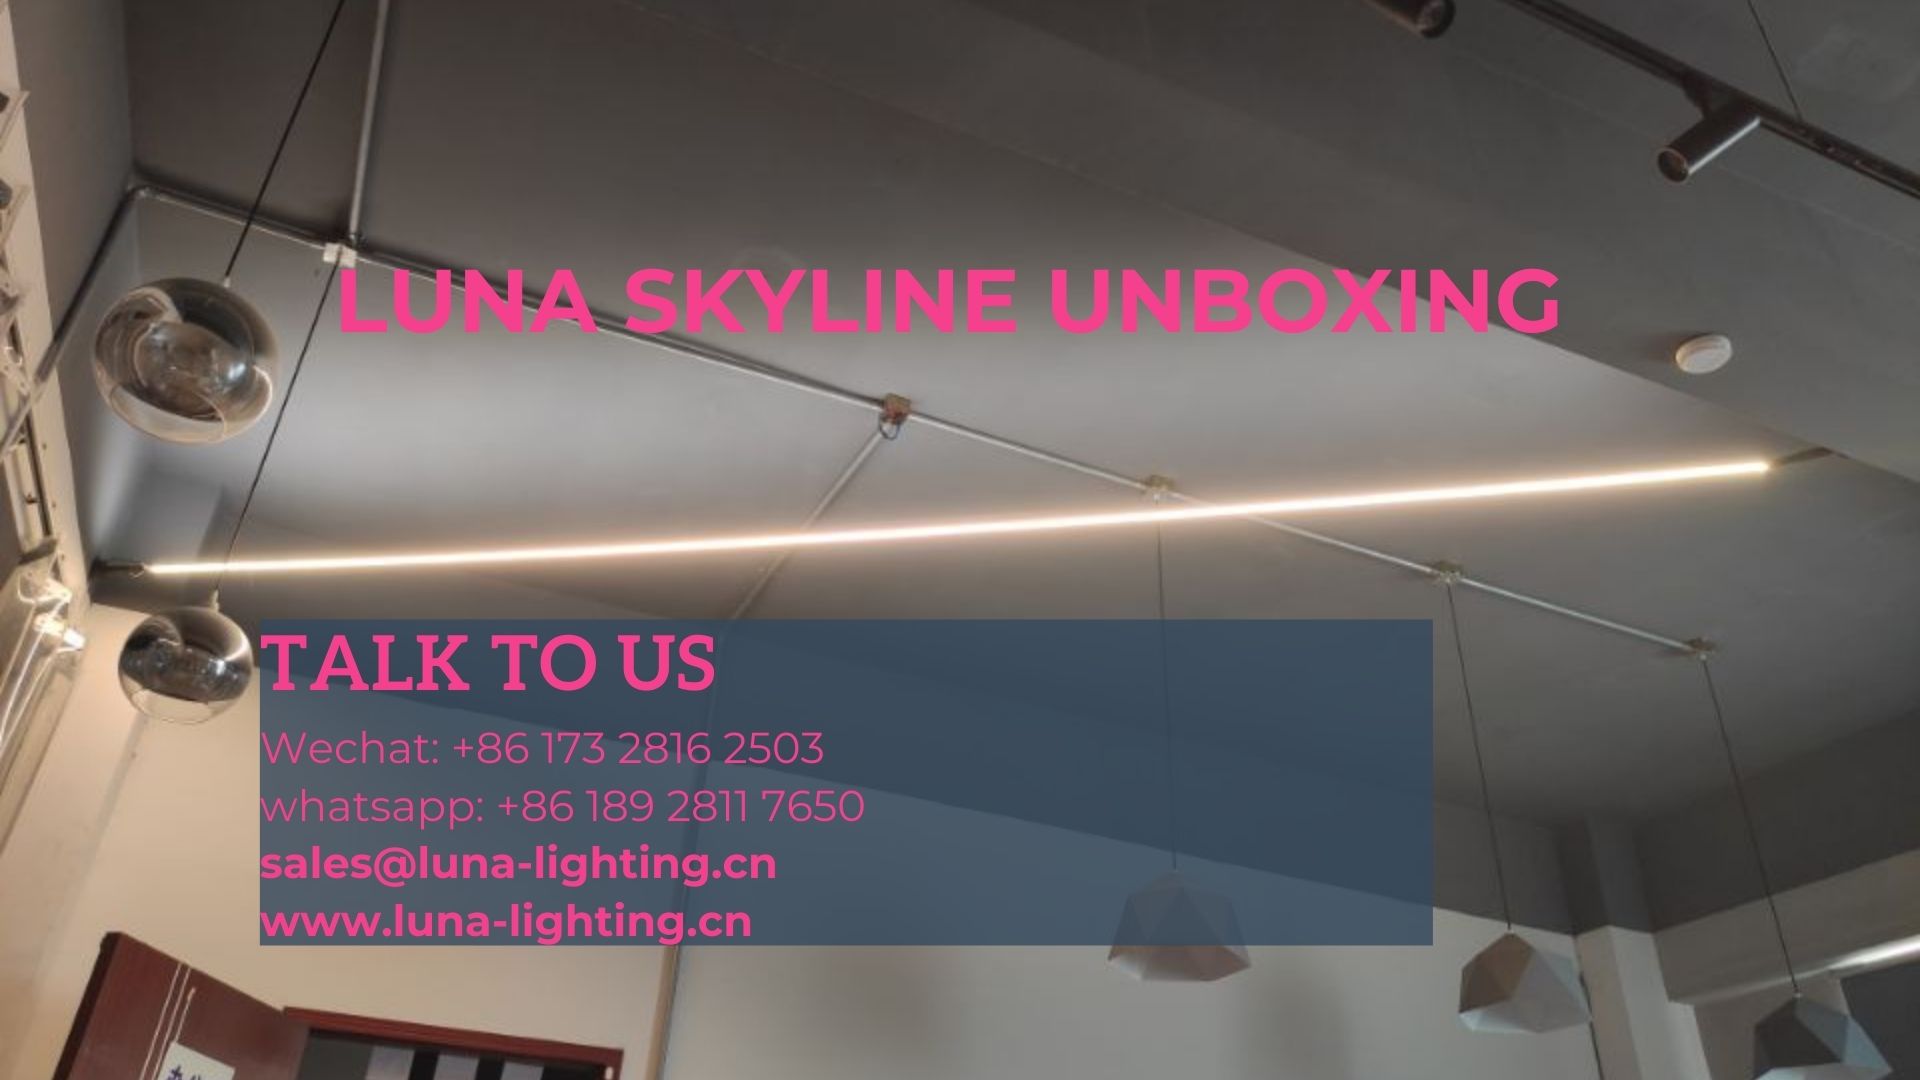 LUNA Skyline Unboxing